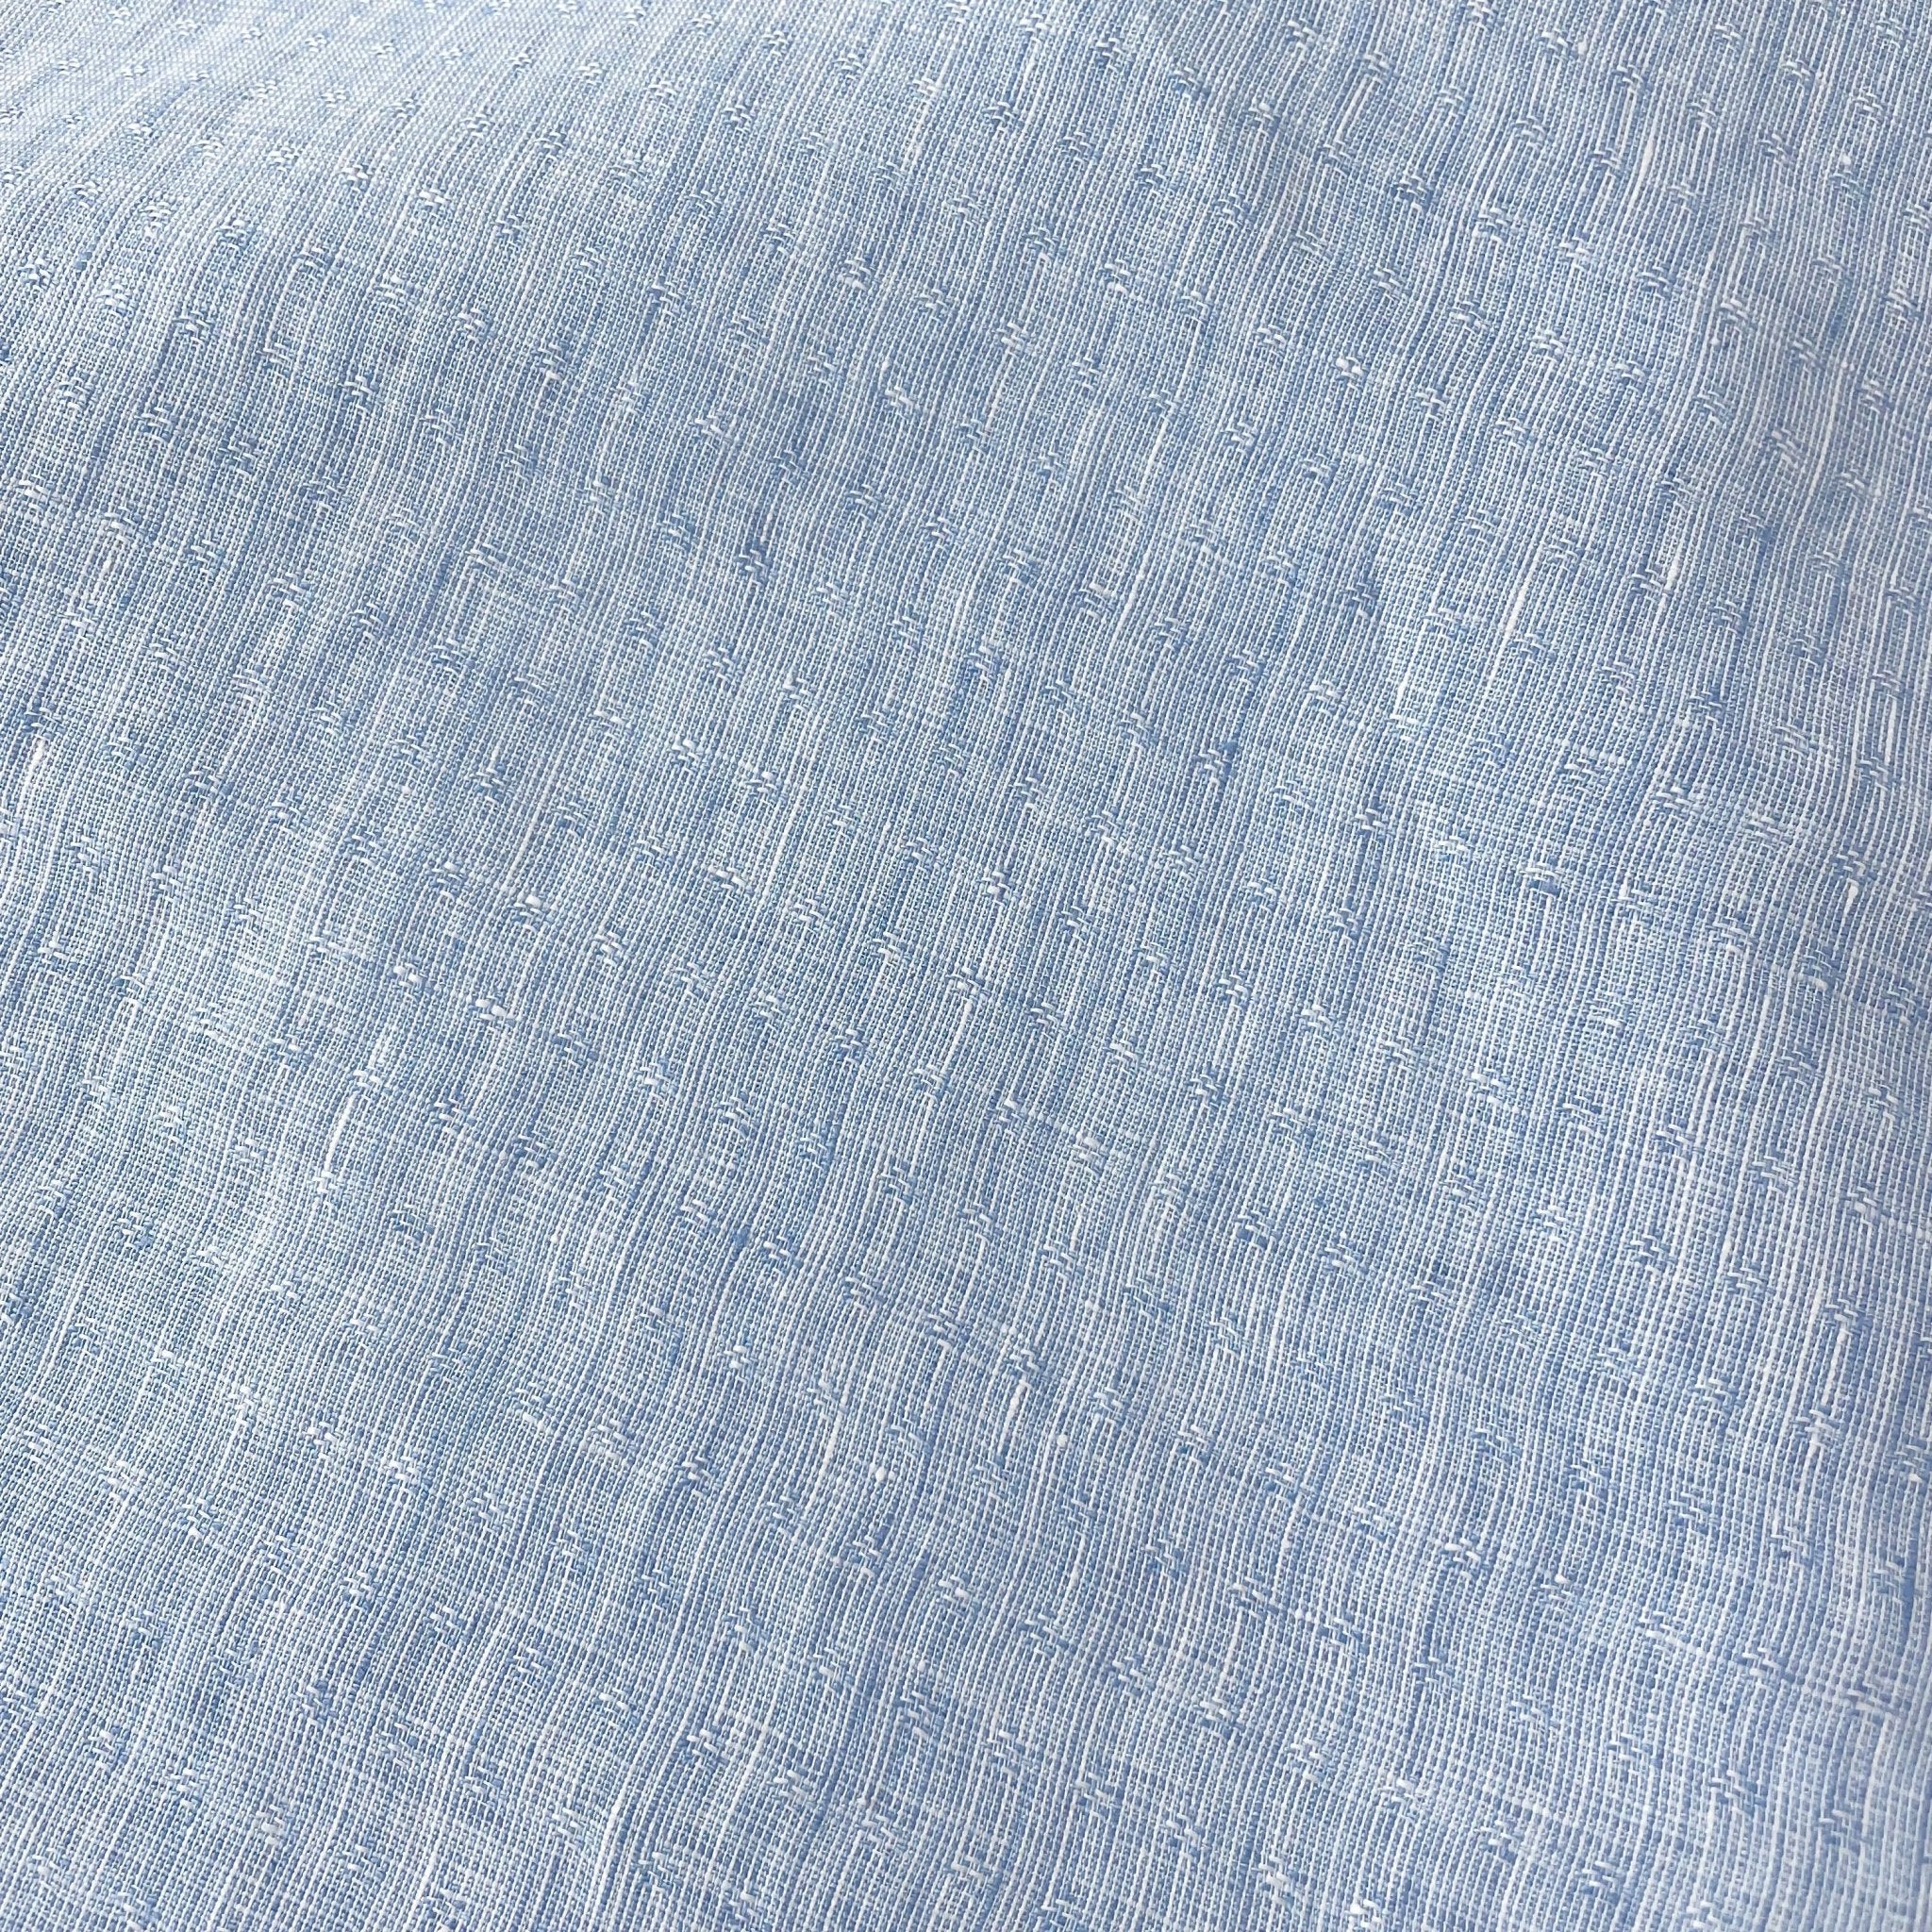 Linen Jacquard Small Pattern Fabric 4888 4887 - The Linen Lab - Grey